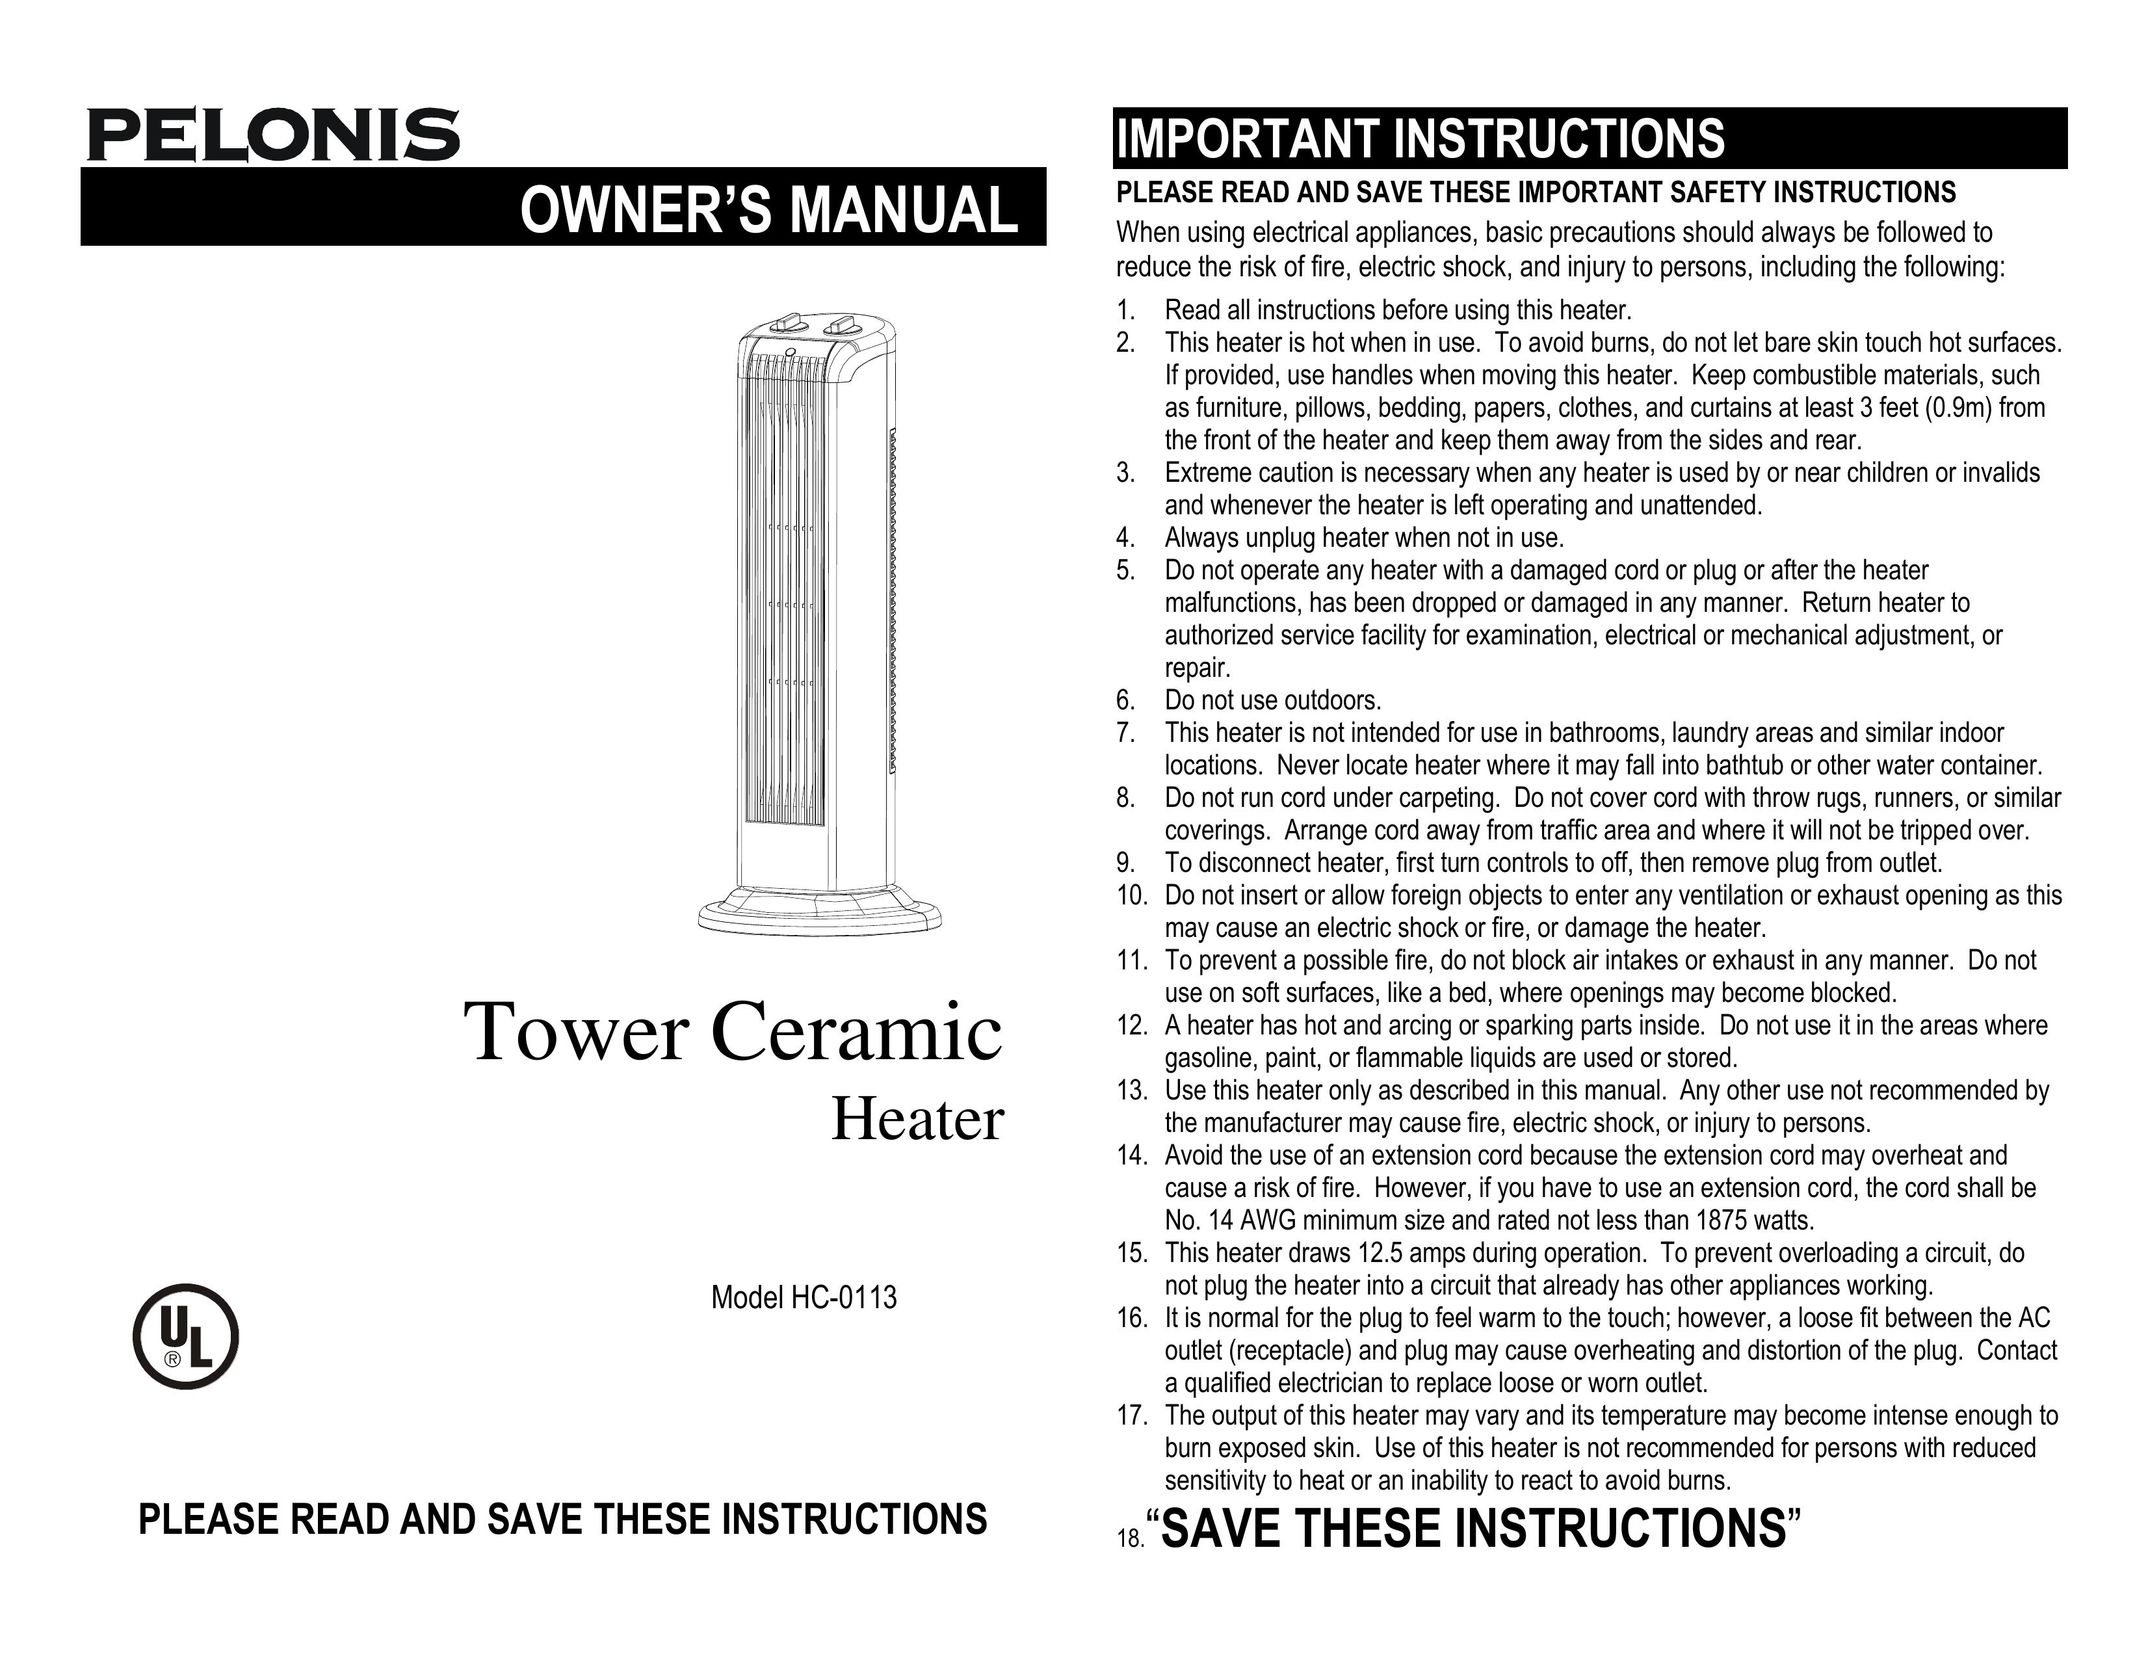 Pelonis HC-0113 Electric Heater User Manual